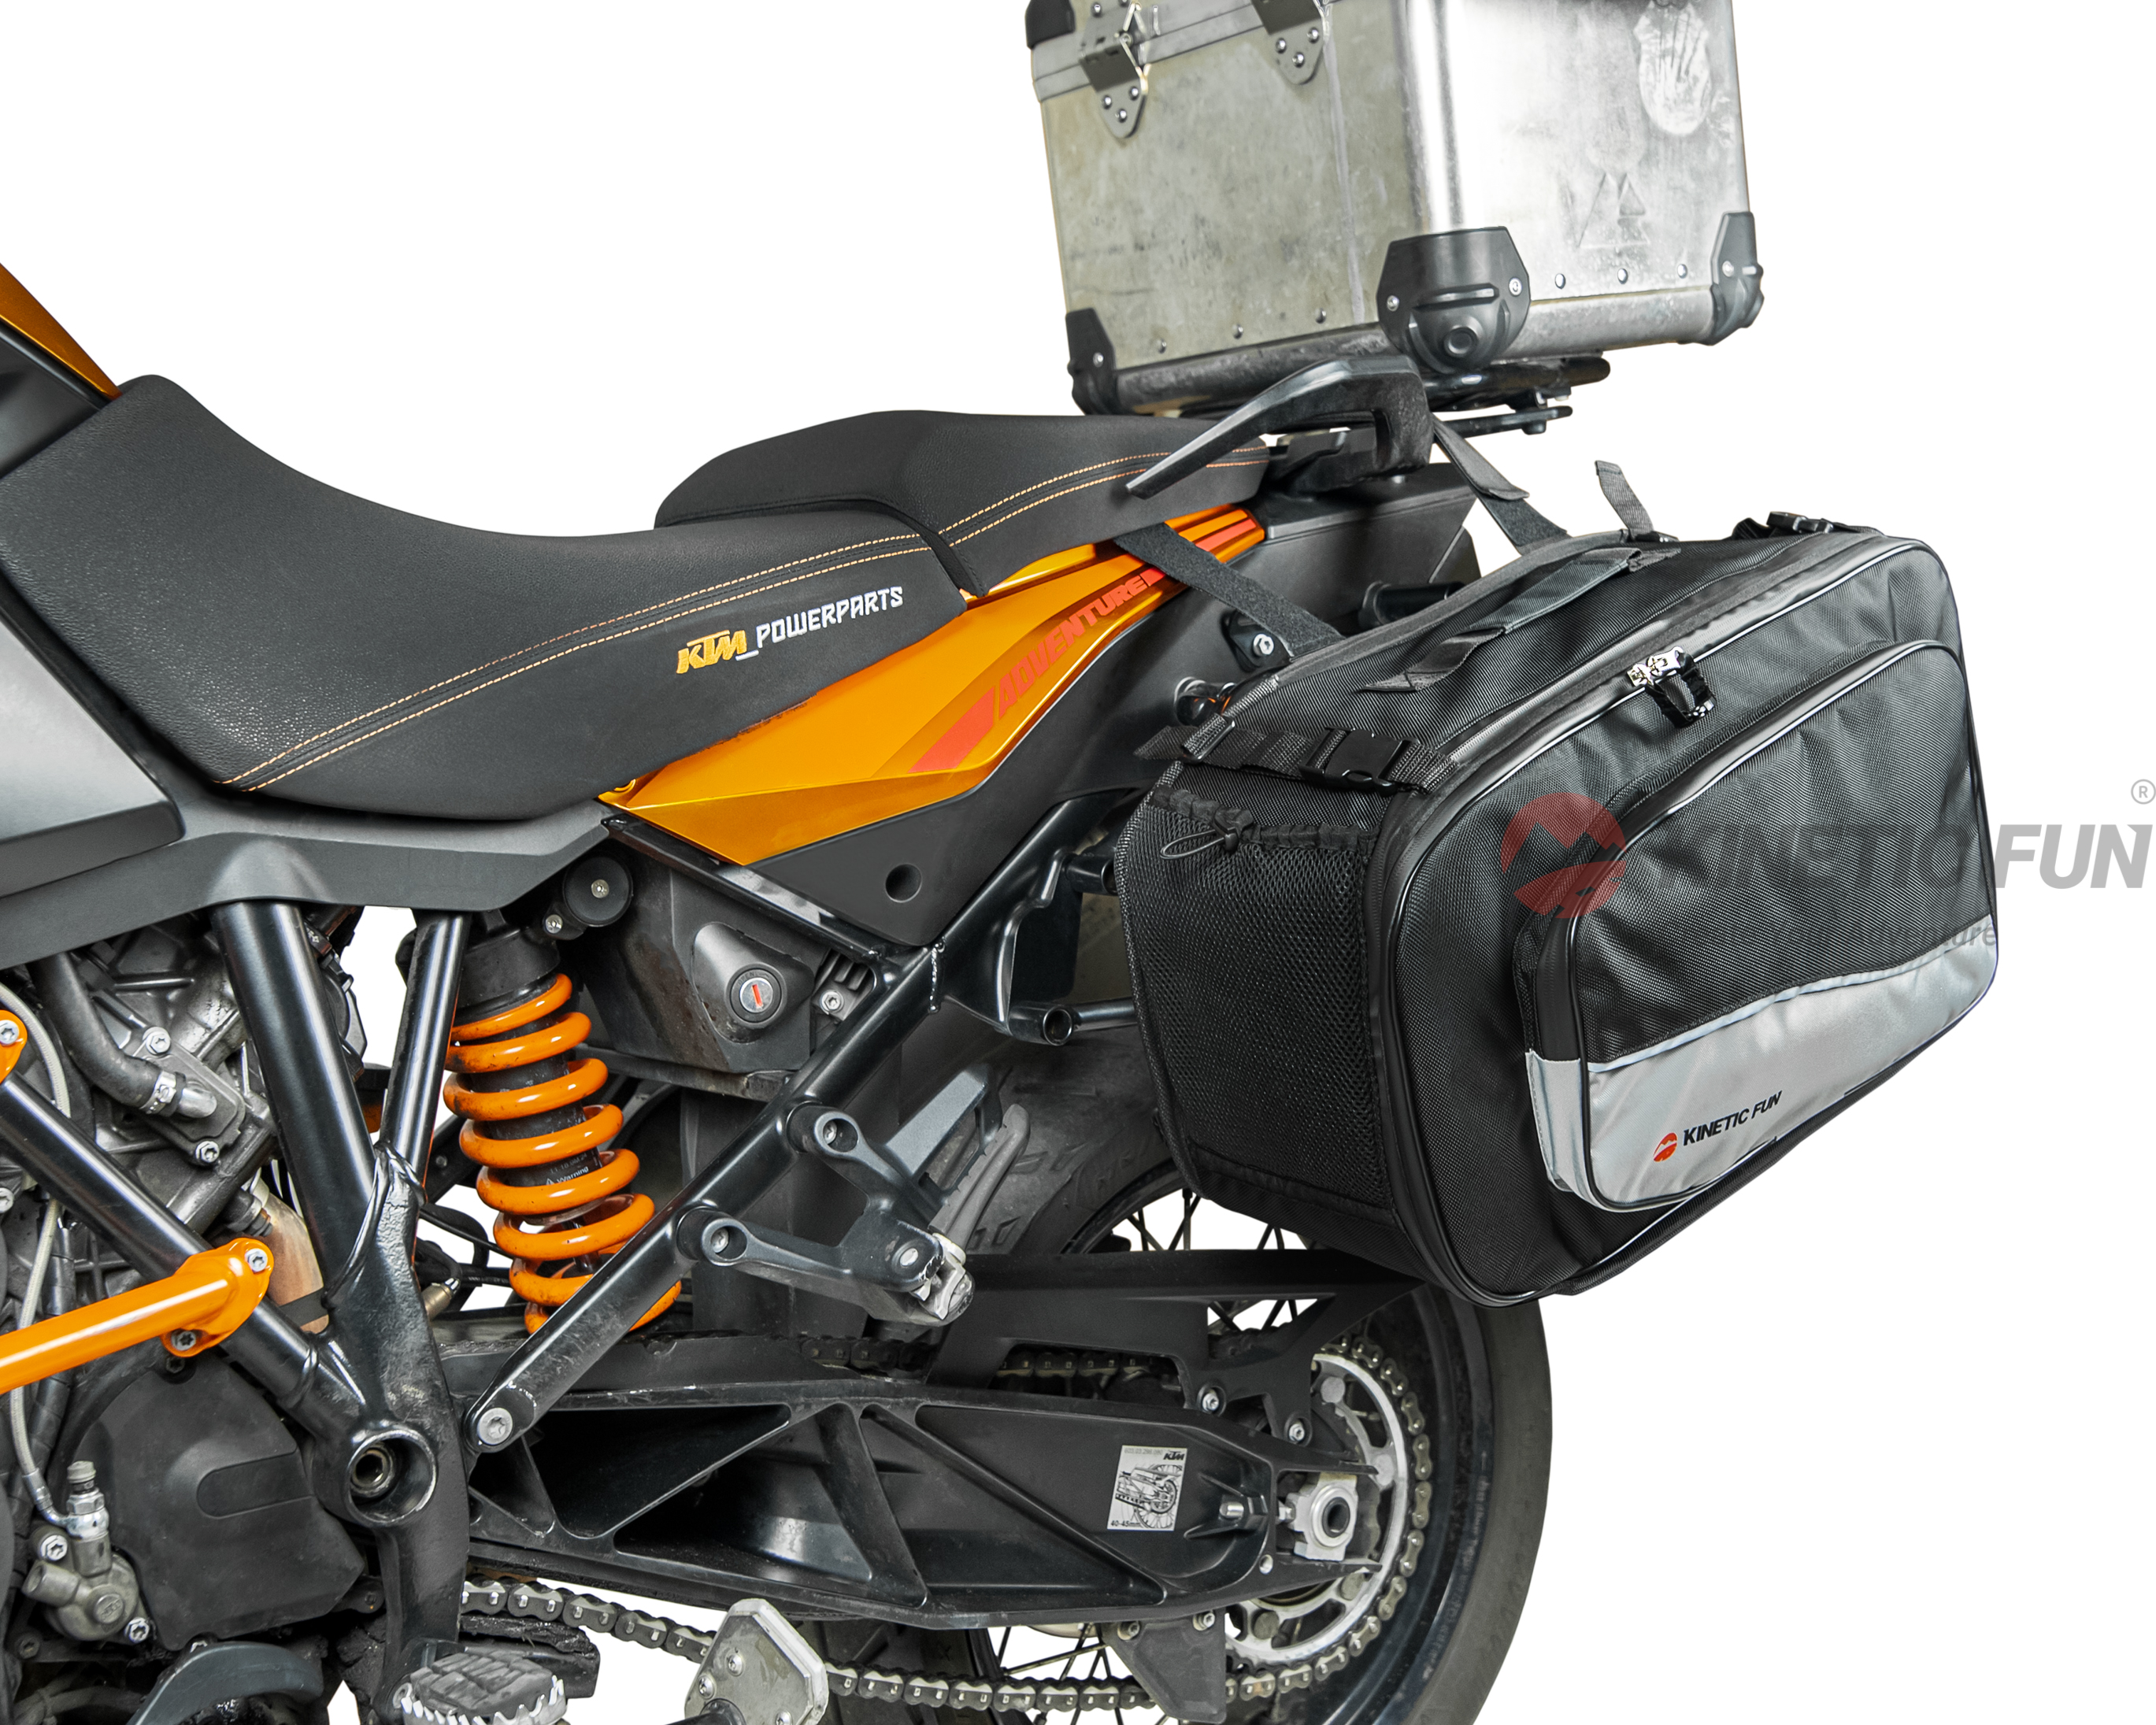 Сумки для мотоцикла Buell боковые - Модель: XL Evo (пара), объём 46-68 литров